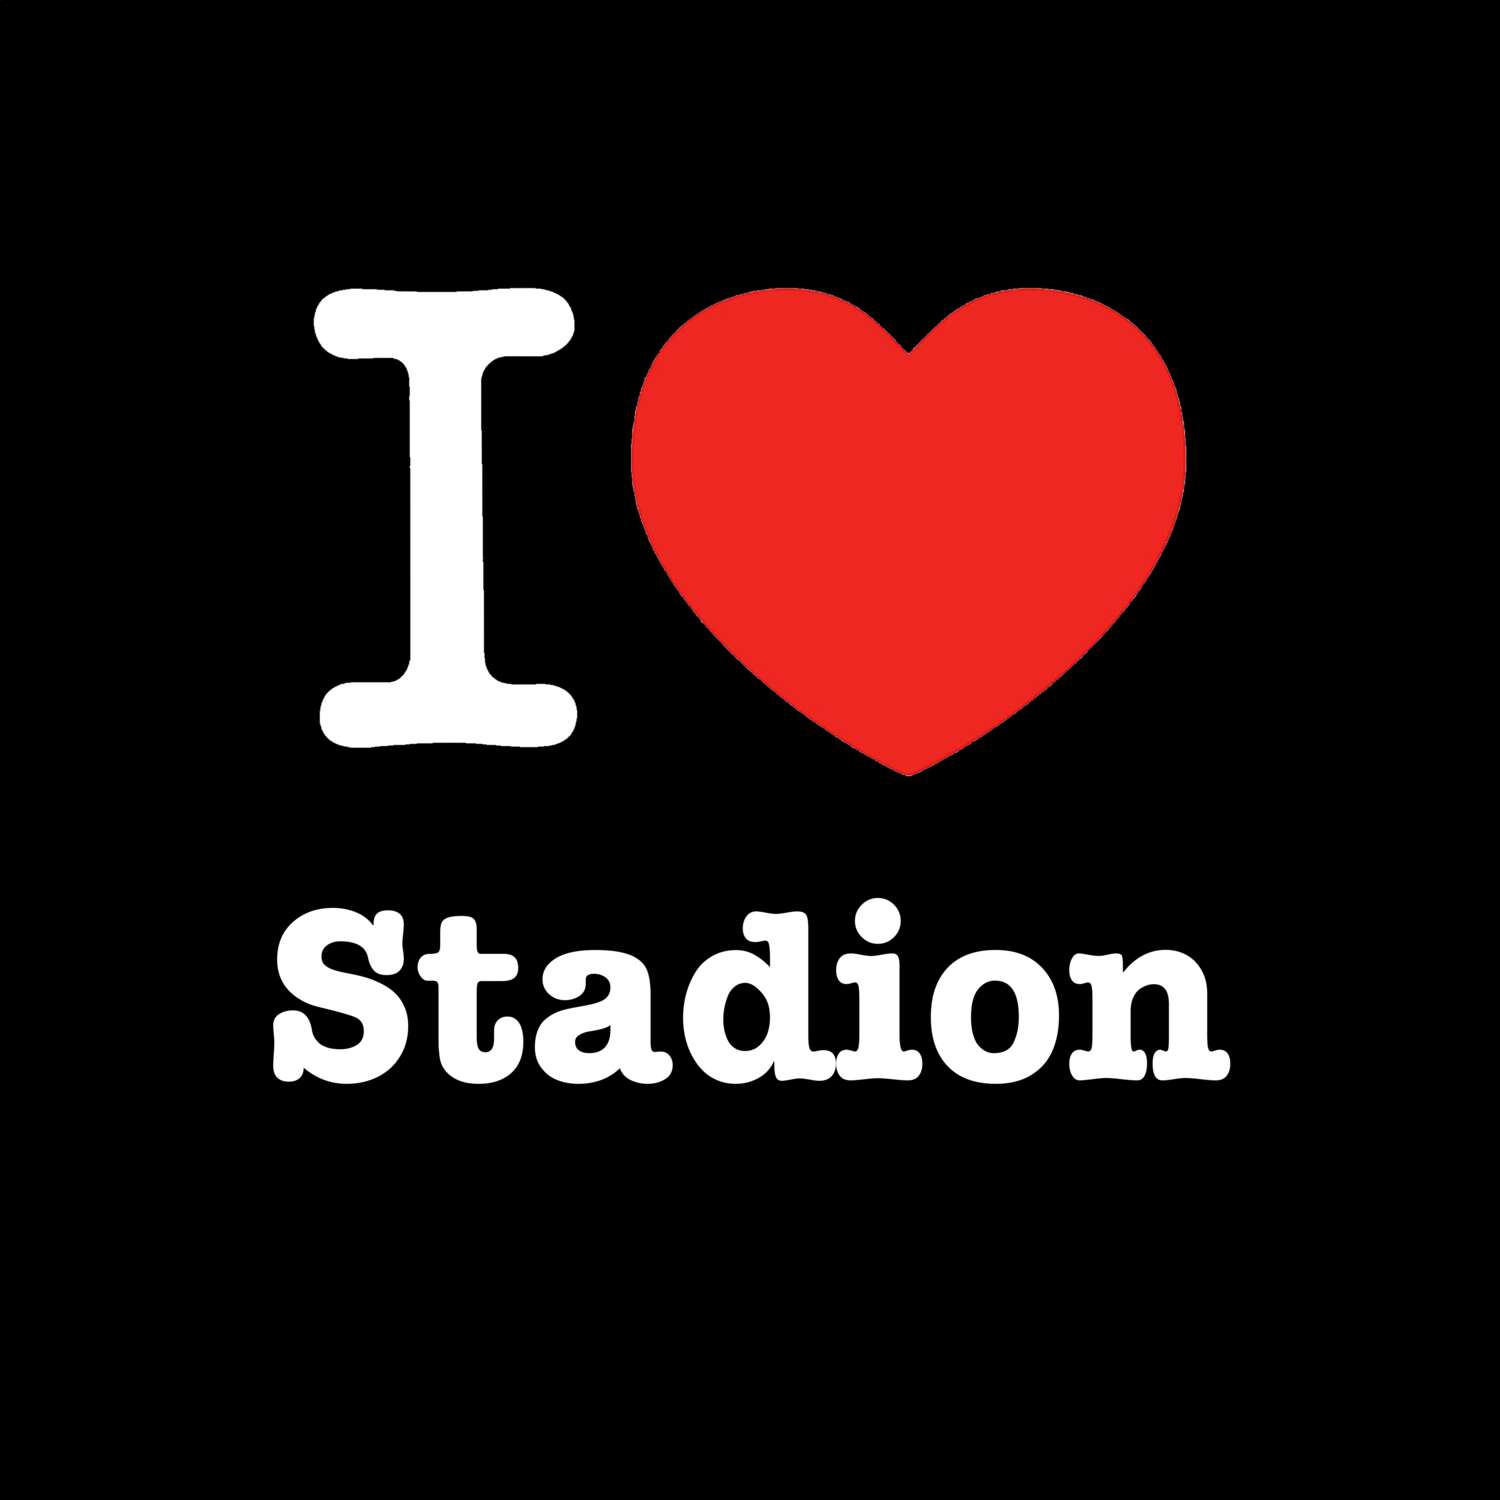 Stadion T-Shirt »I love«